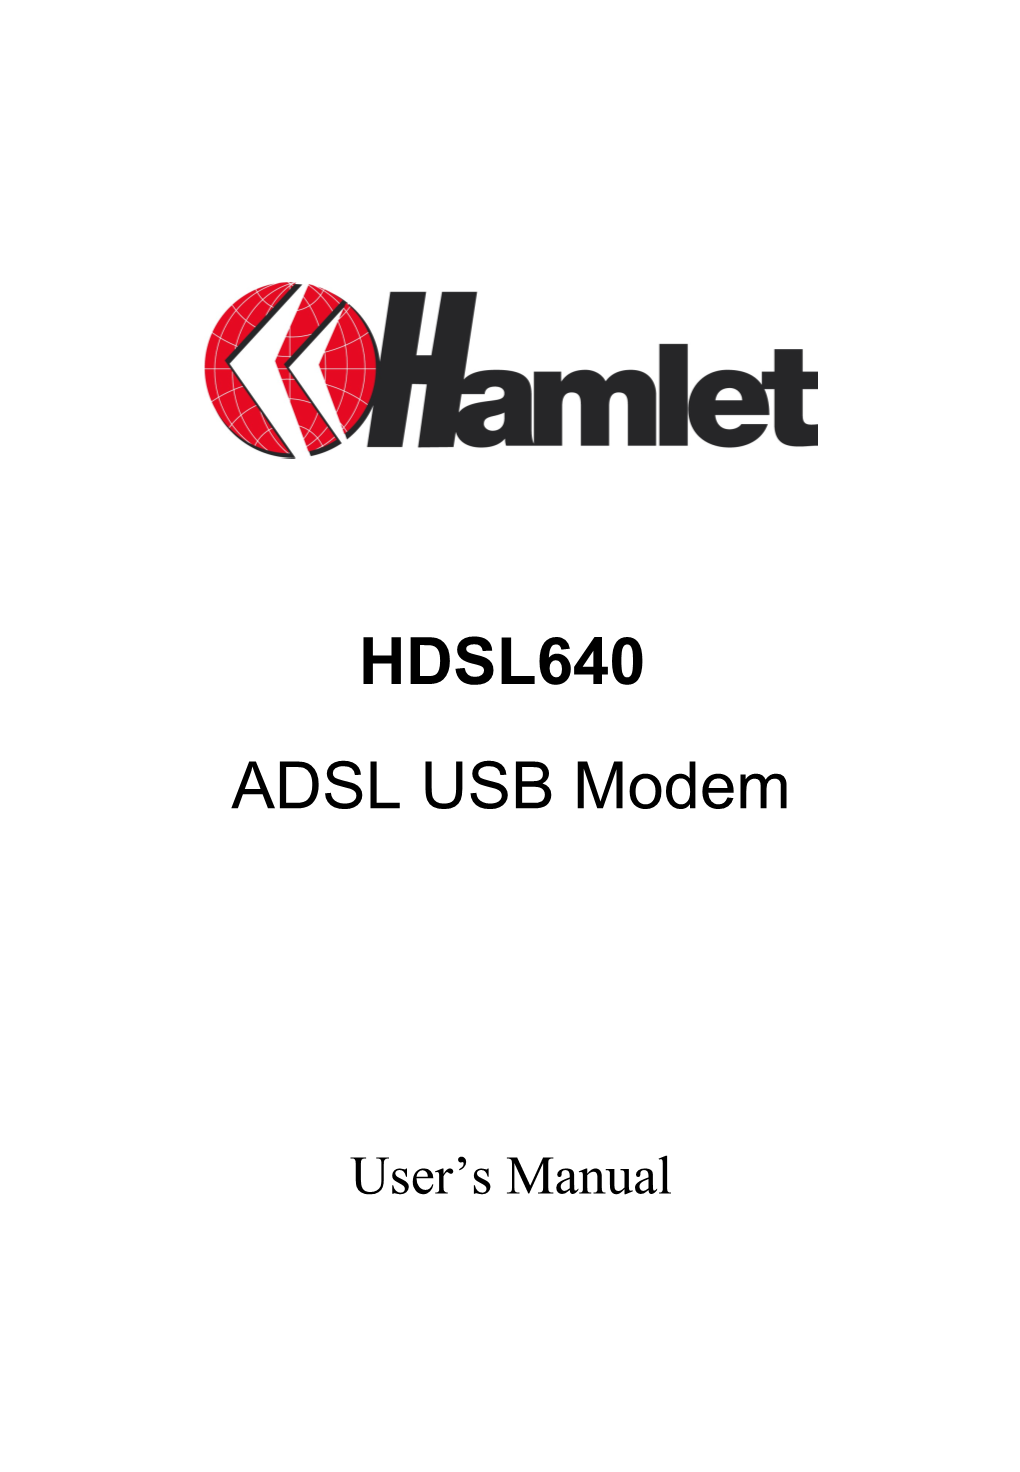 USB ADSL Modem User's Manual (English)